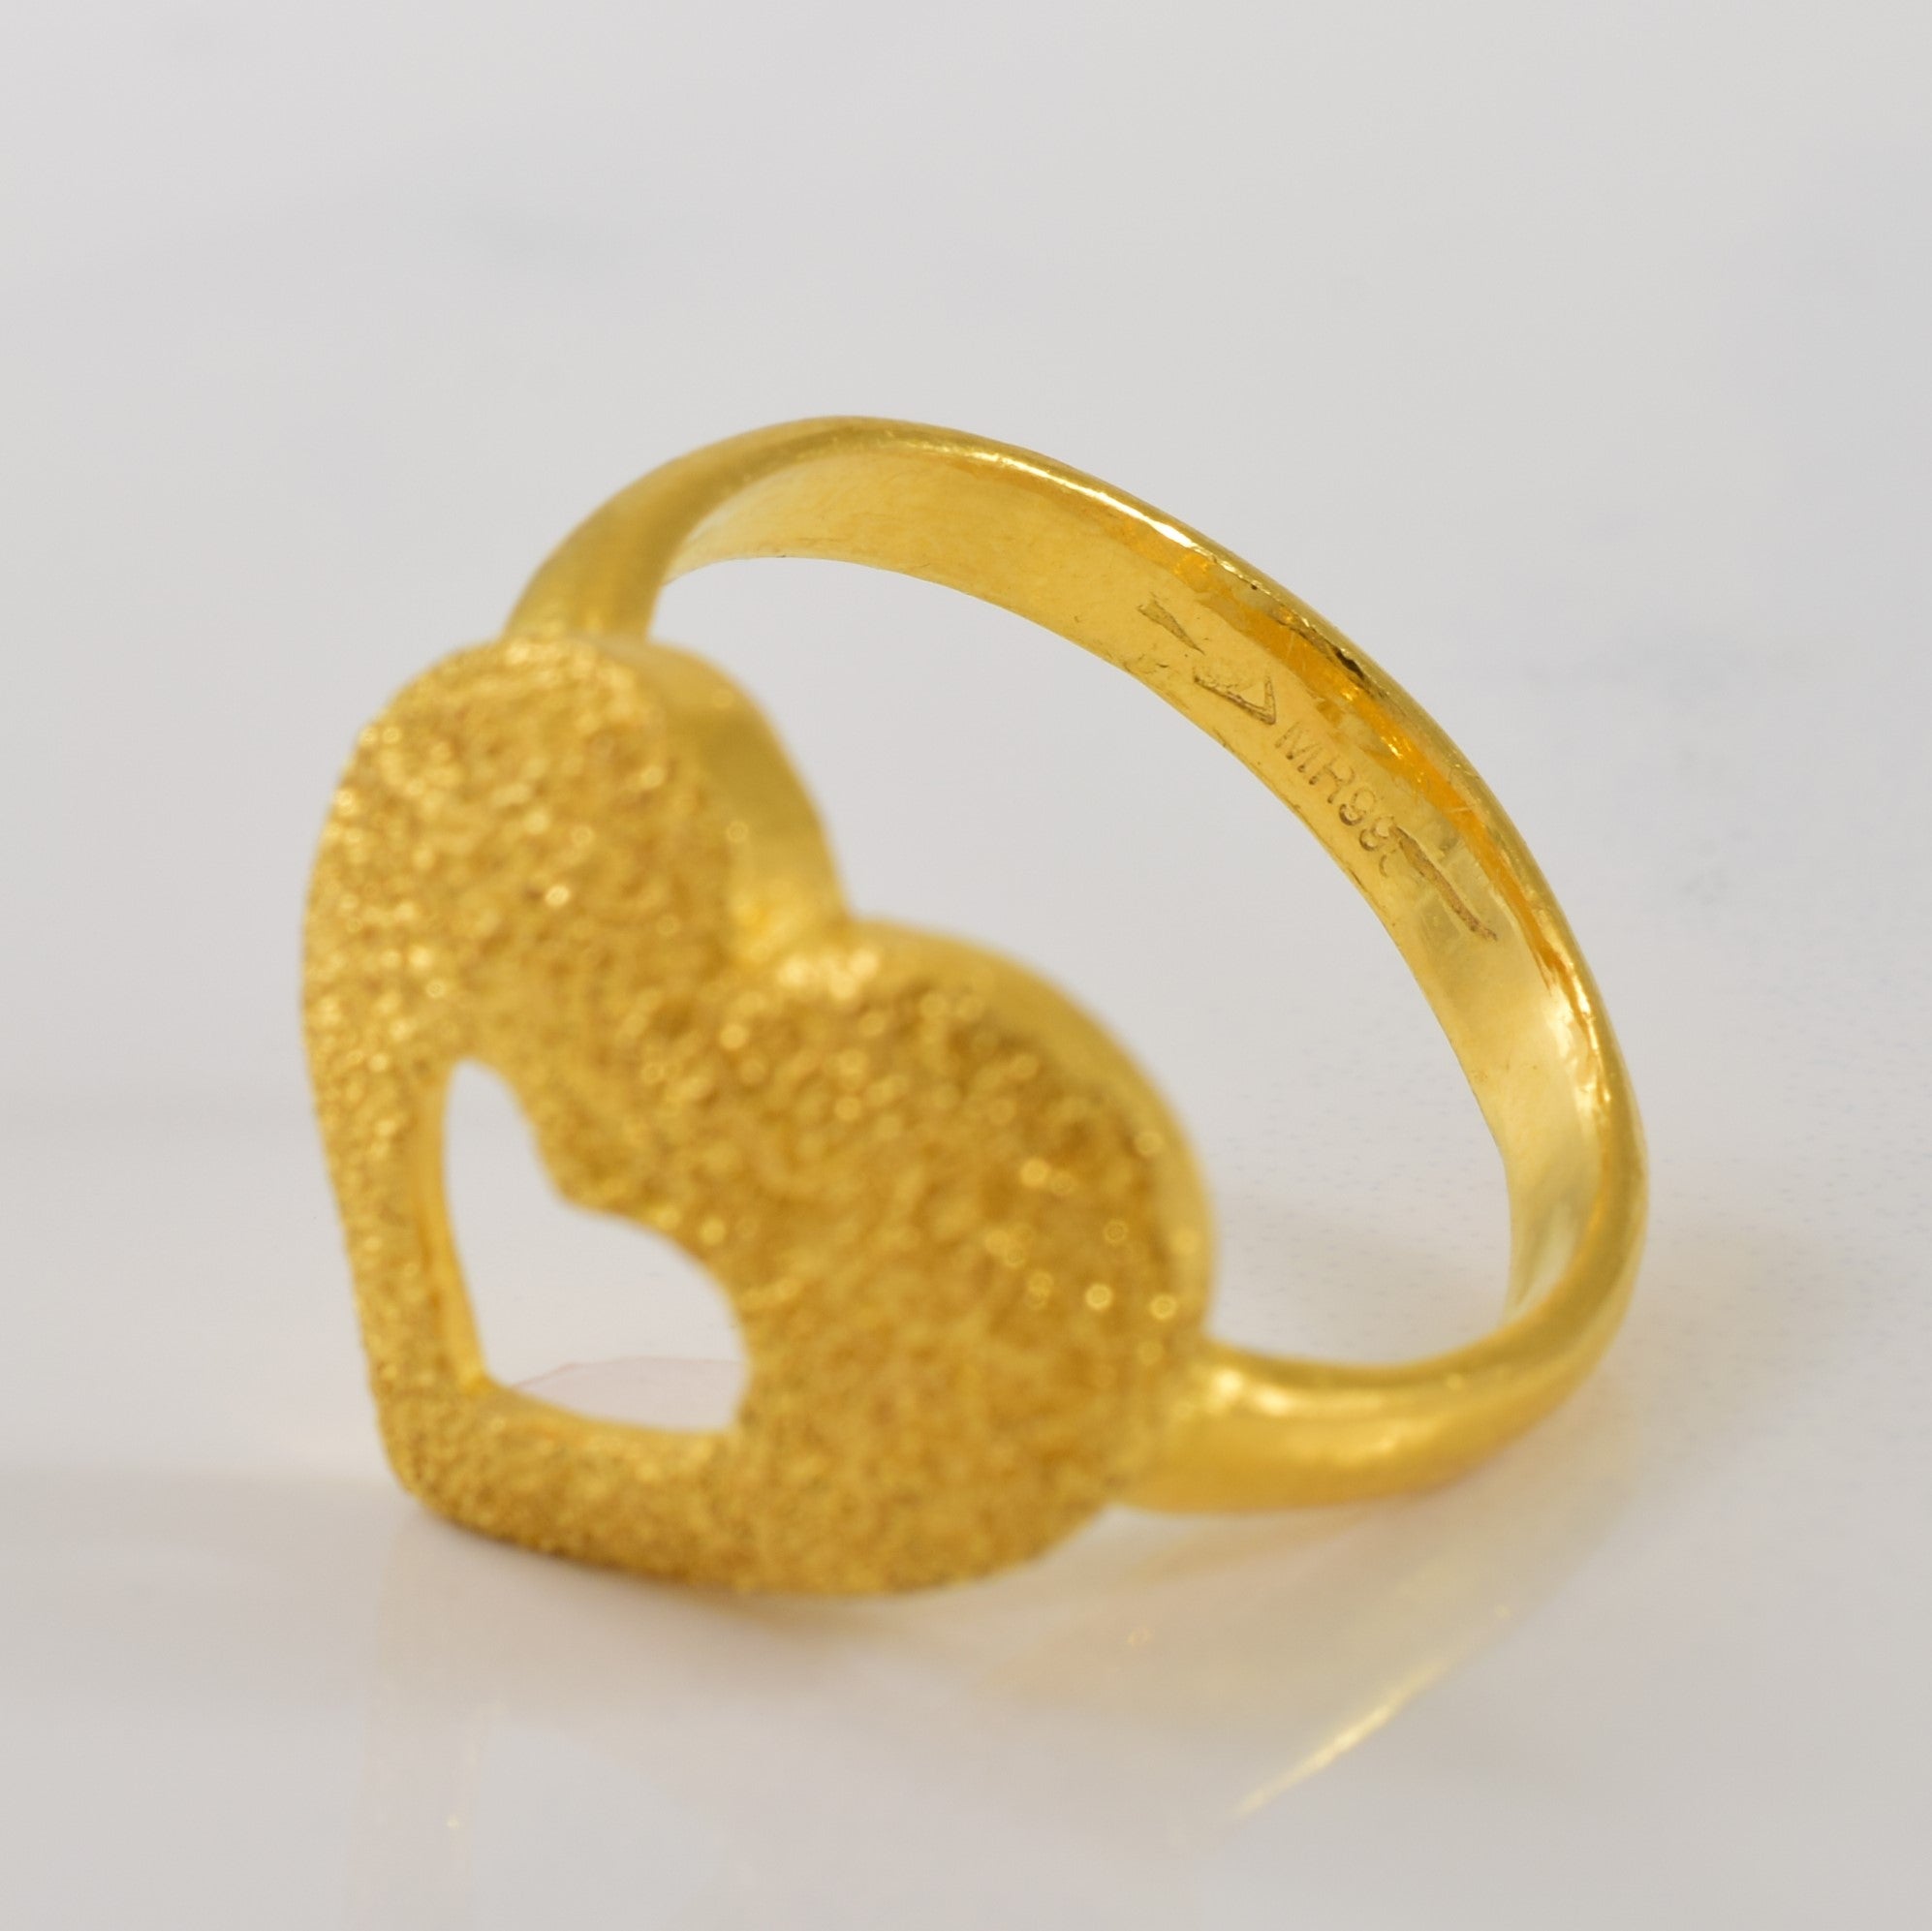 24k Yellow Gold Heart Ring | SZ 5.75 |